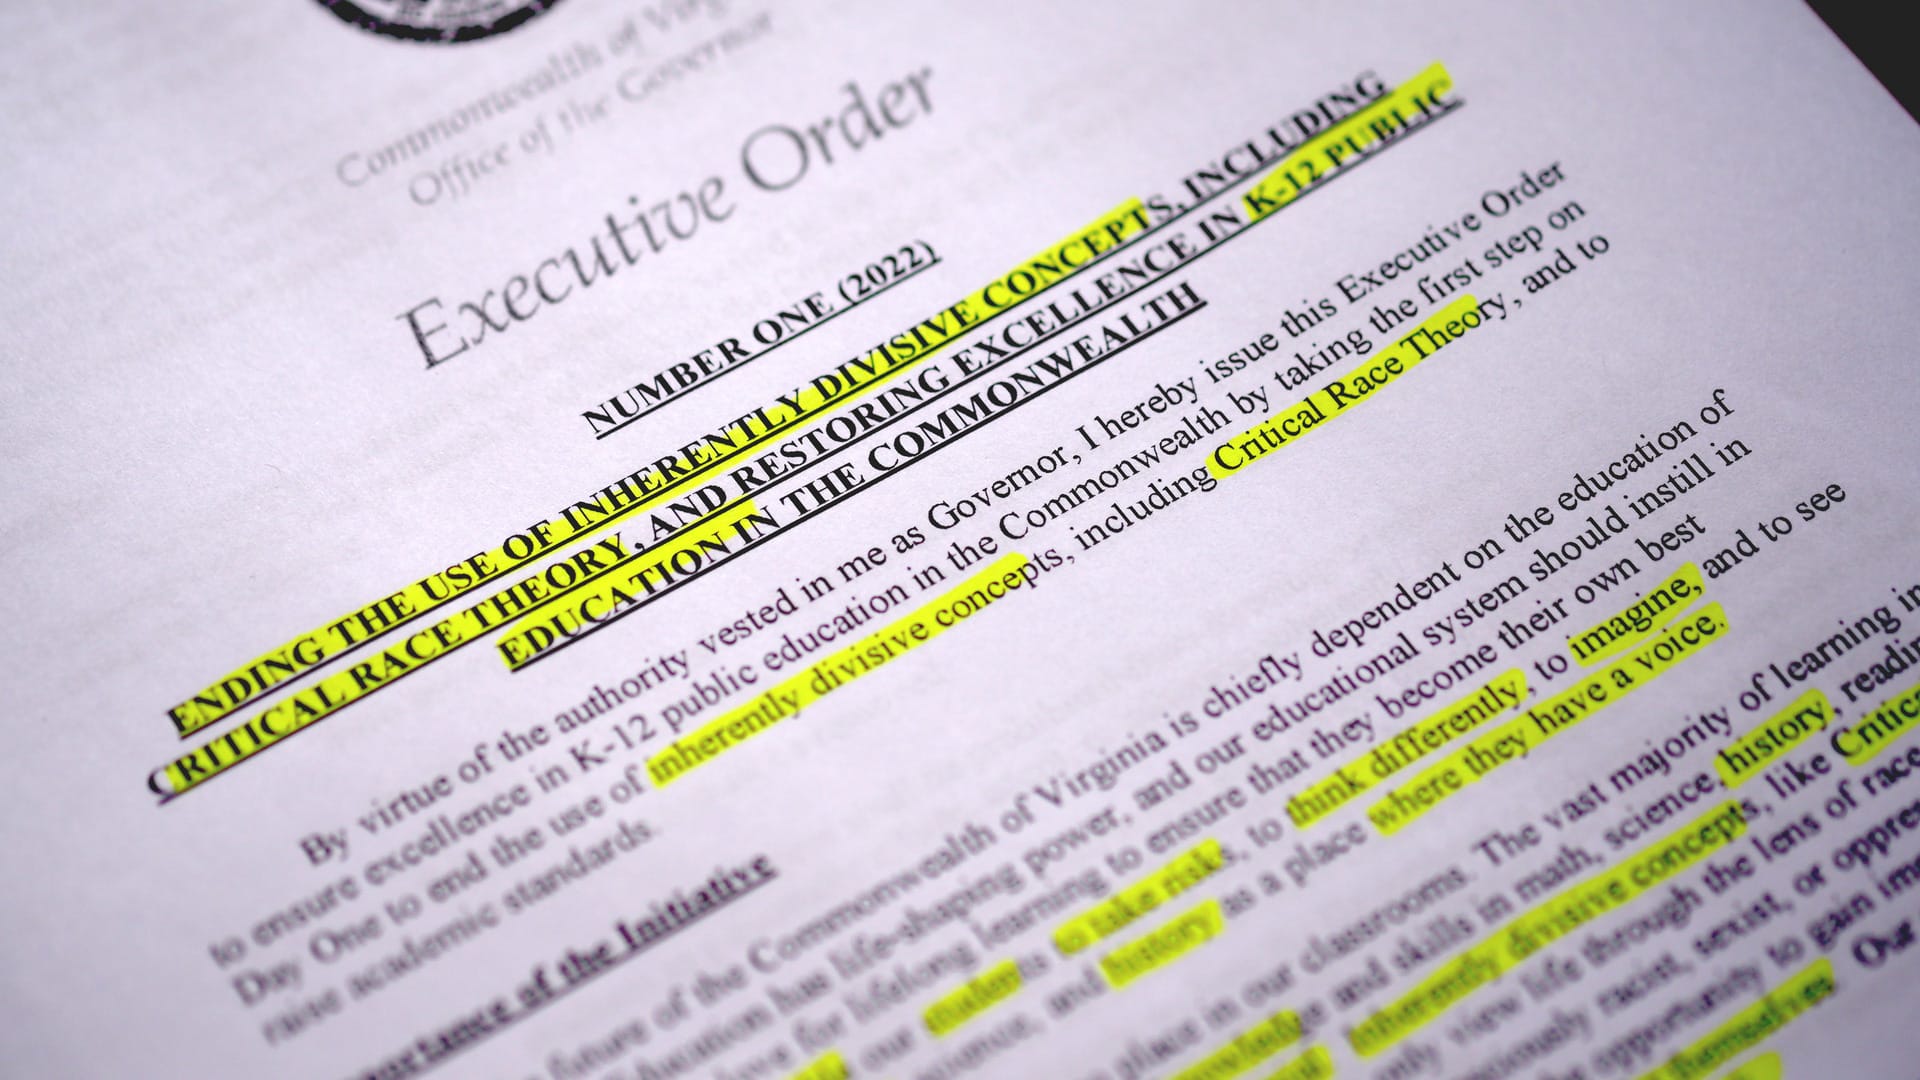 Virginia Gubernatorial Executive Order (Detail)